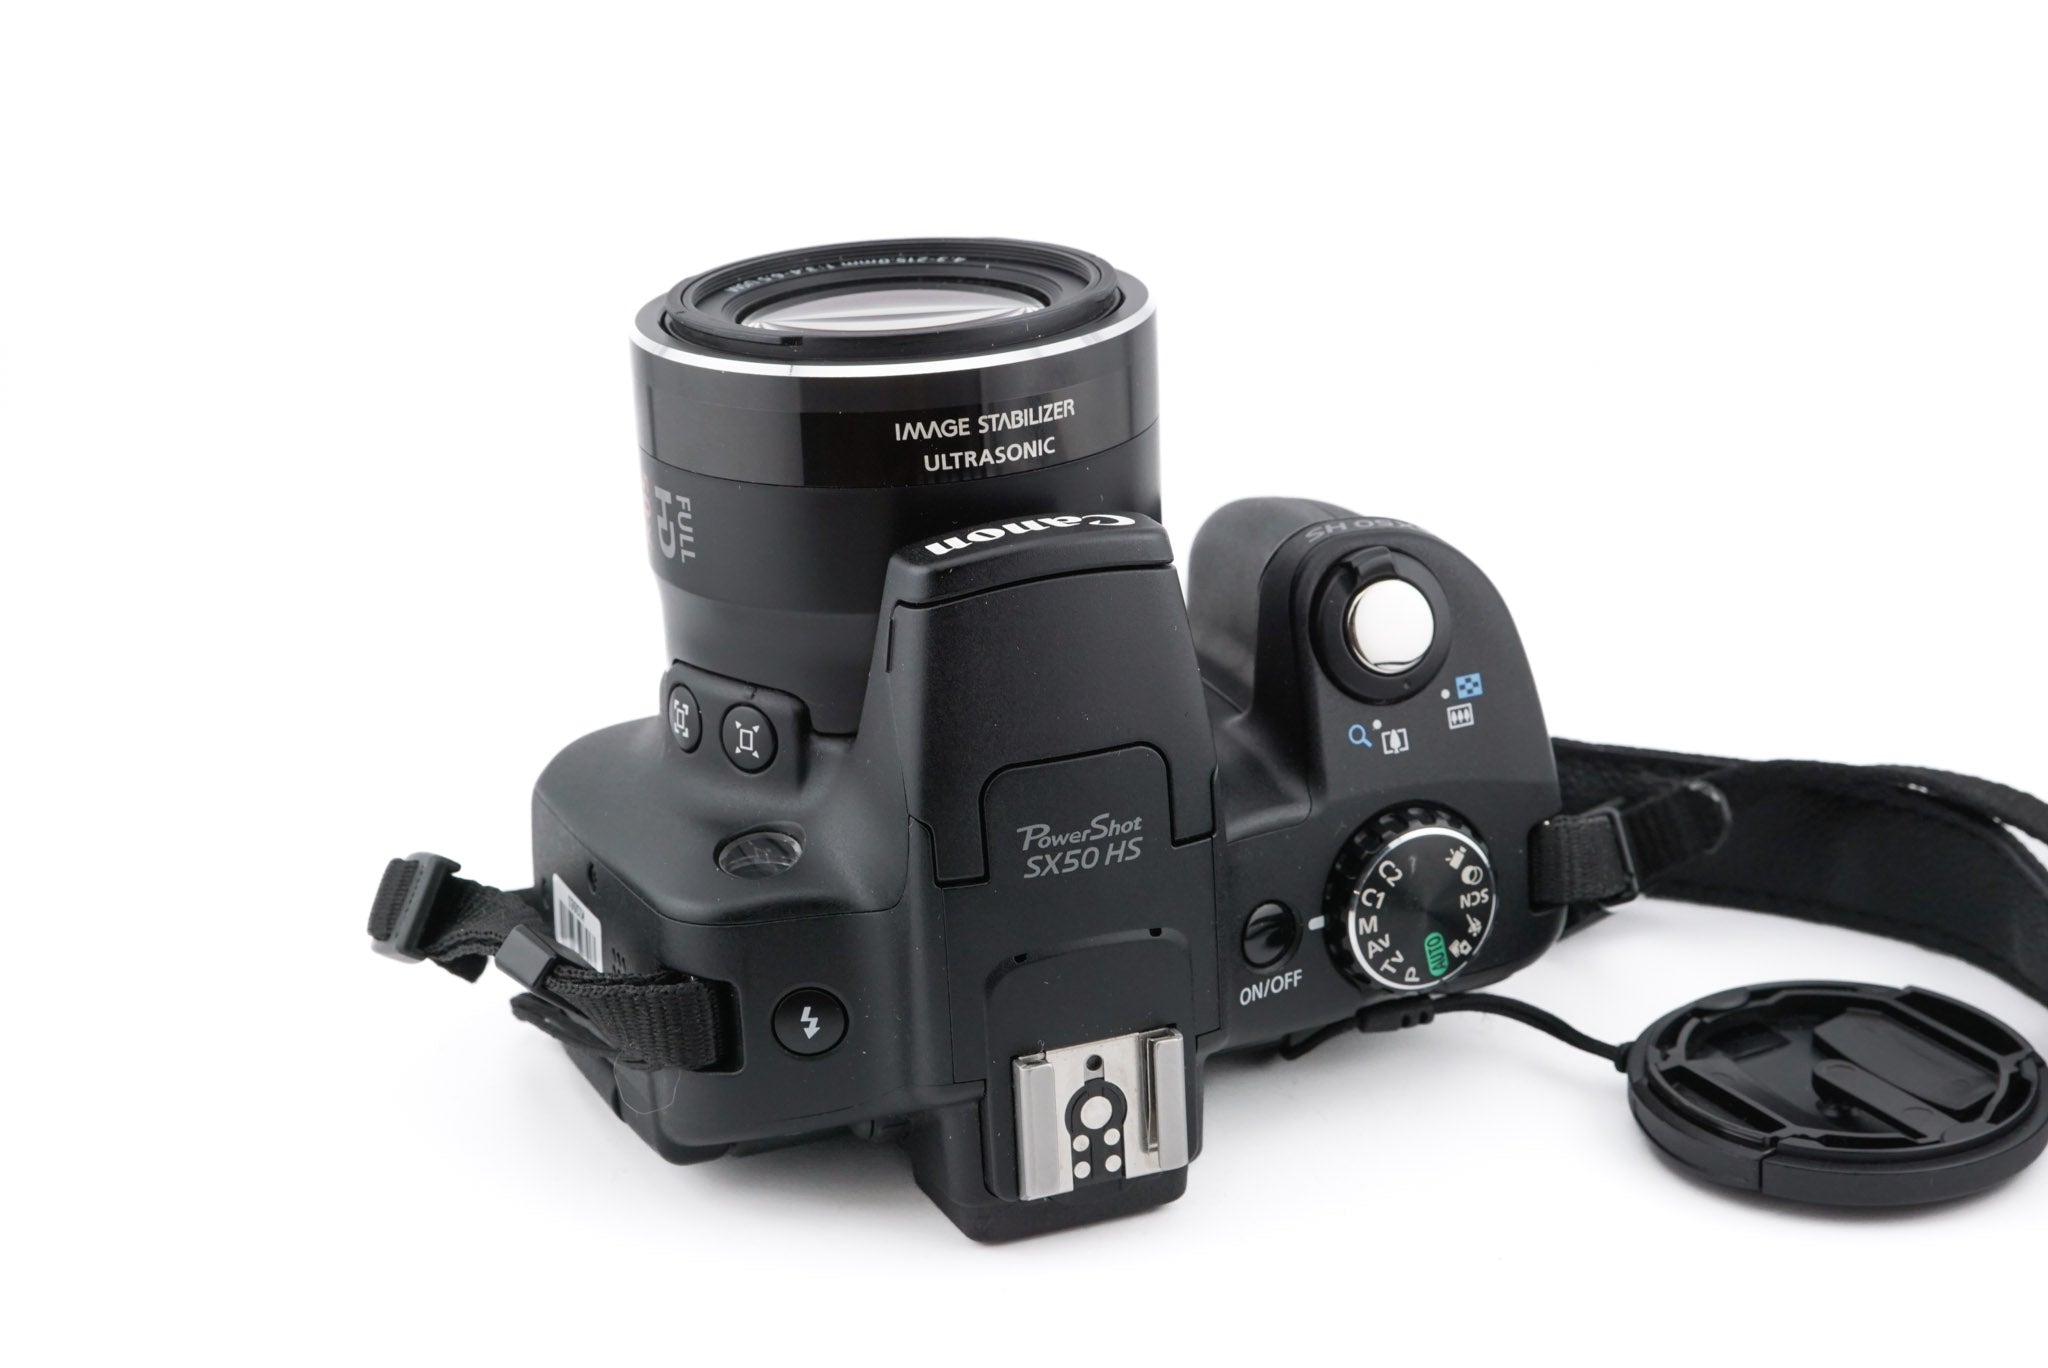 canon(キャノン) PowerShot SX50 HS デジタルカメラ - カメラ